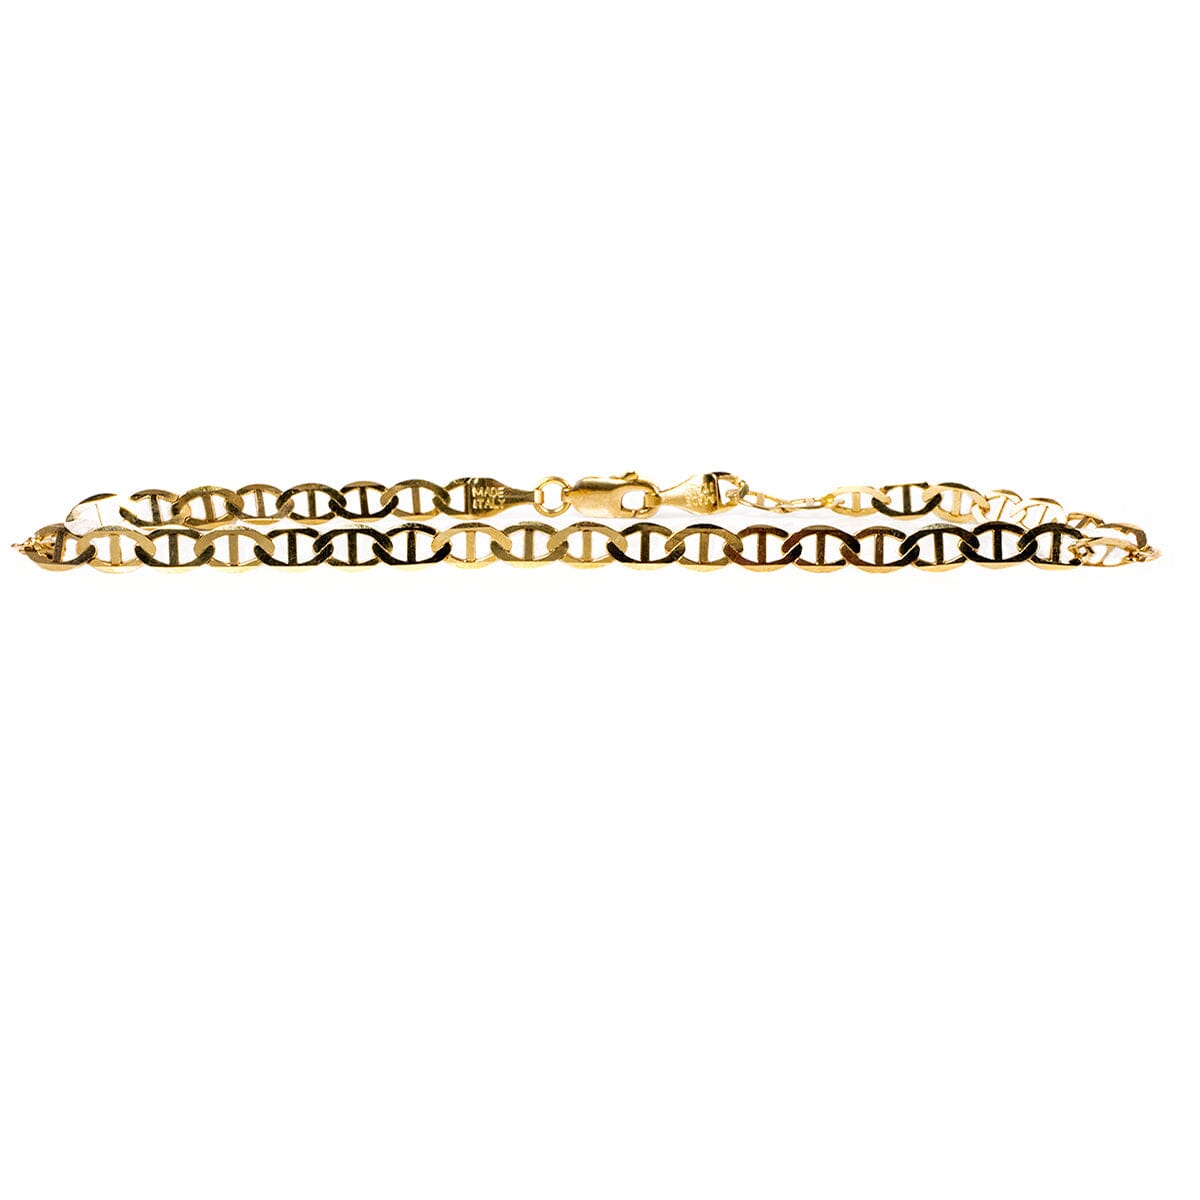 Great Lakes Boutique 10 k Gold Mariner Ankle Bracelet